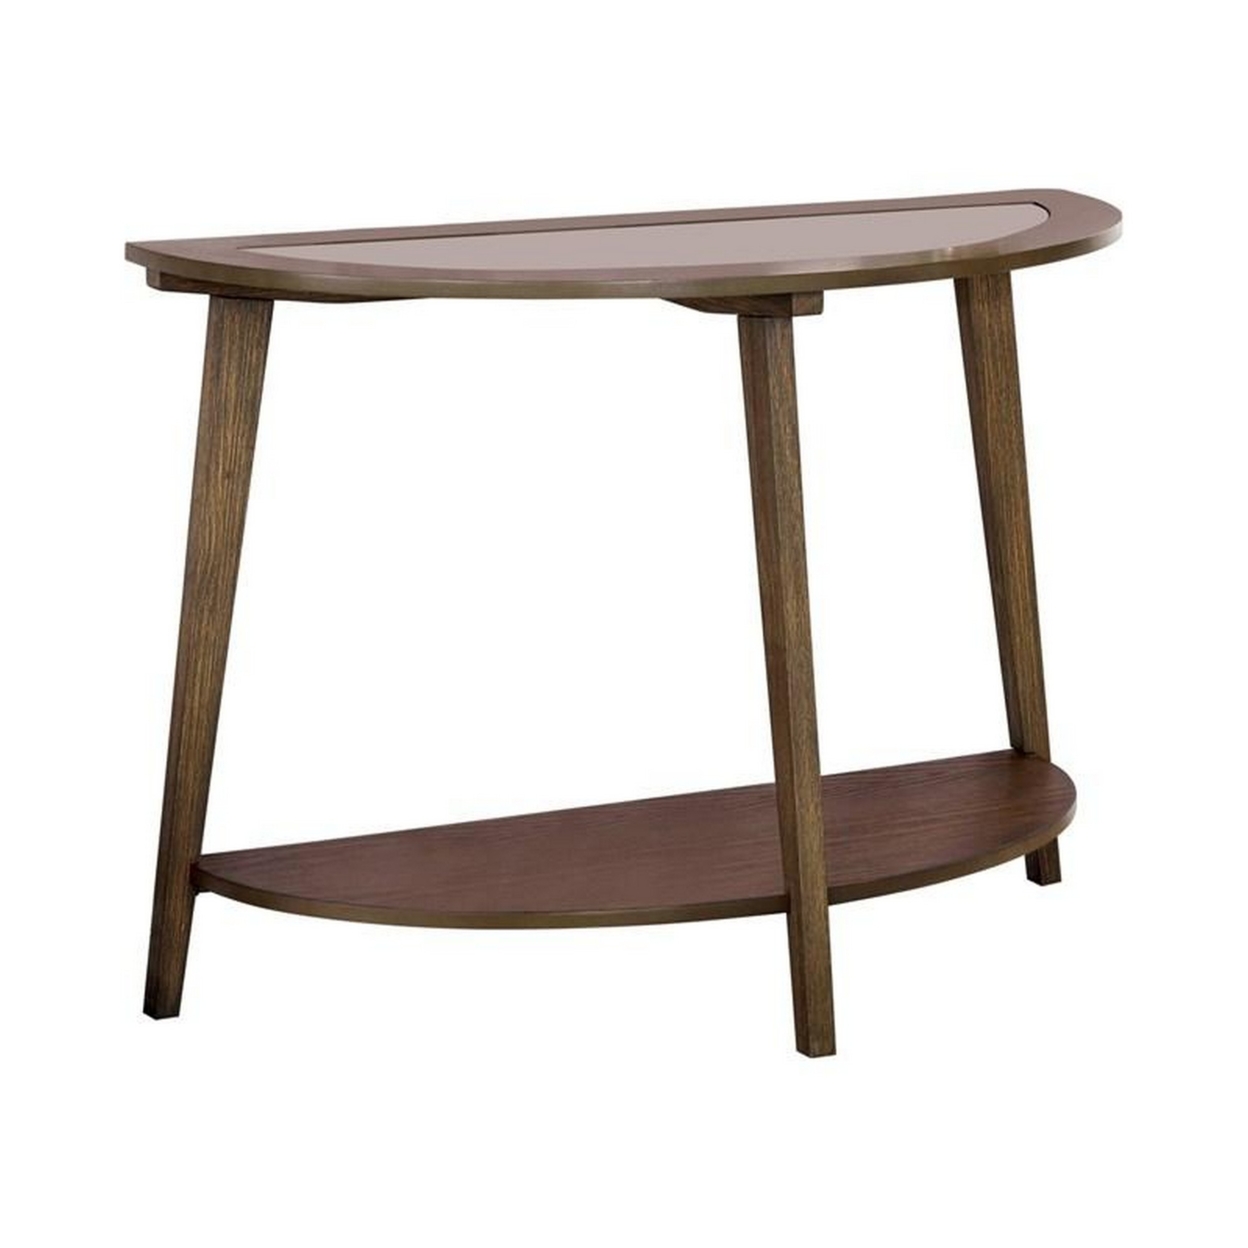 30 Inch Semicircular Wooden Sofa Table With Glass Top, Brown- Saltoro Sherpi